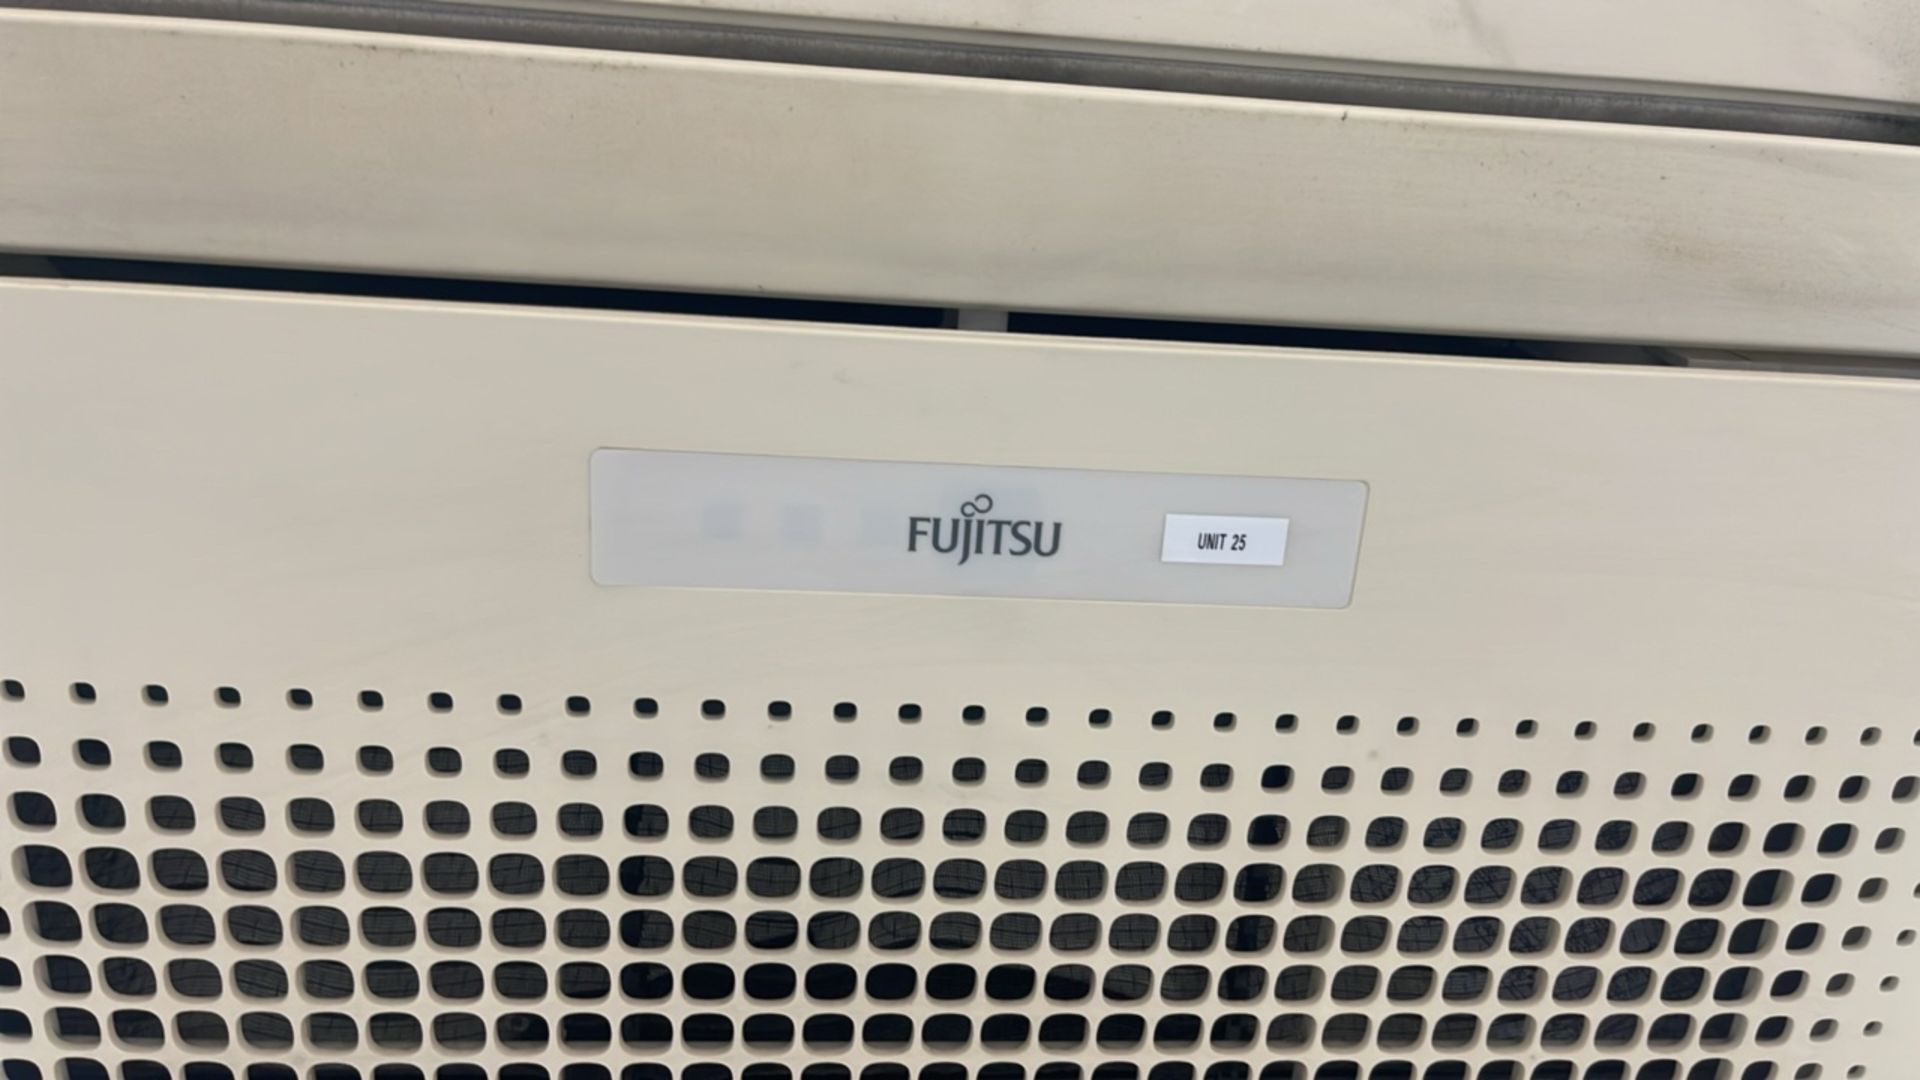 Fujitsu Ceiling Cassette - Image 2 of 3